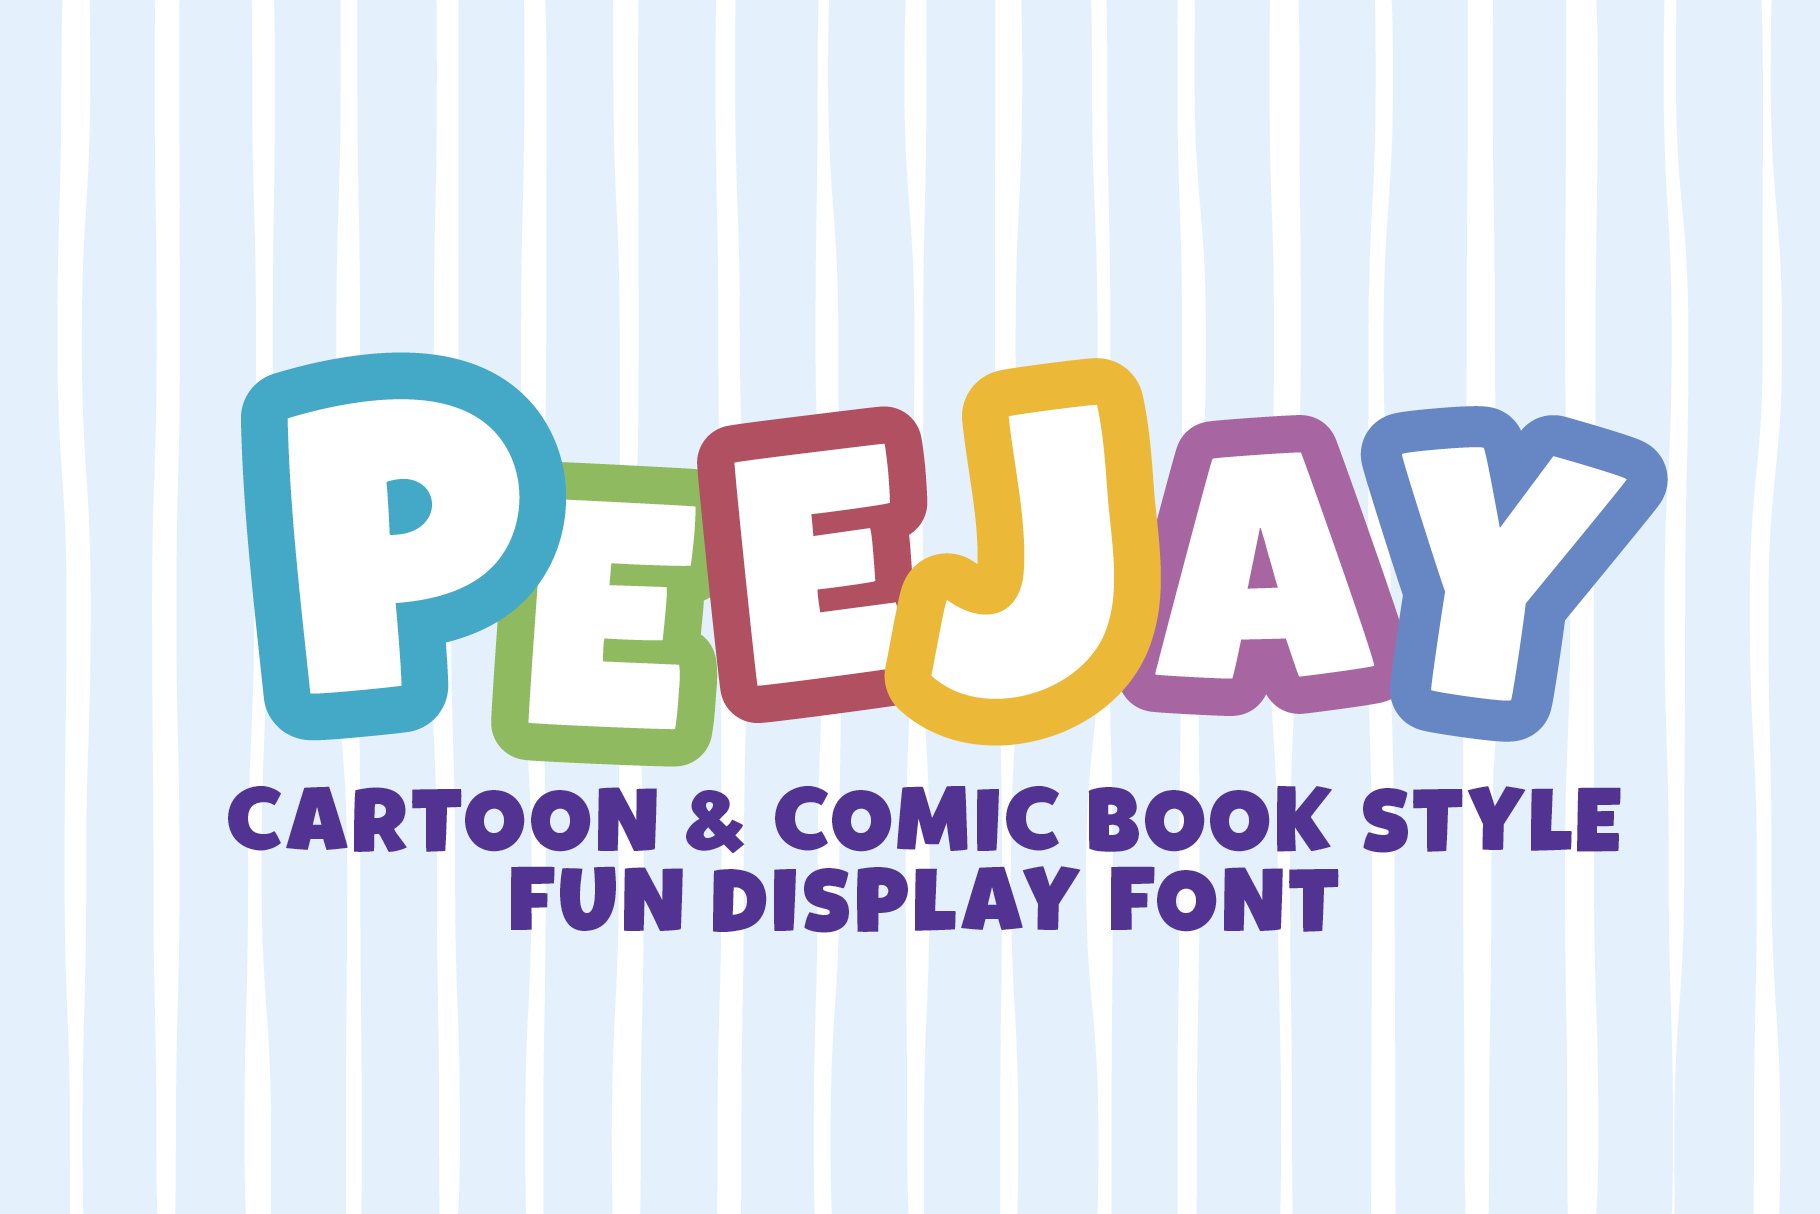 PEEJAY | Cartoon & Comic Book Font cover image.